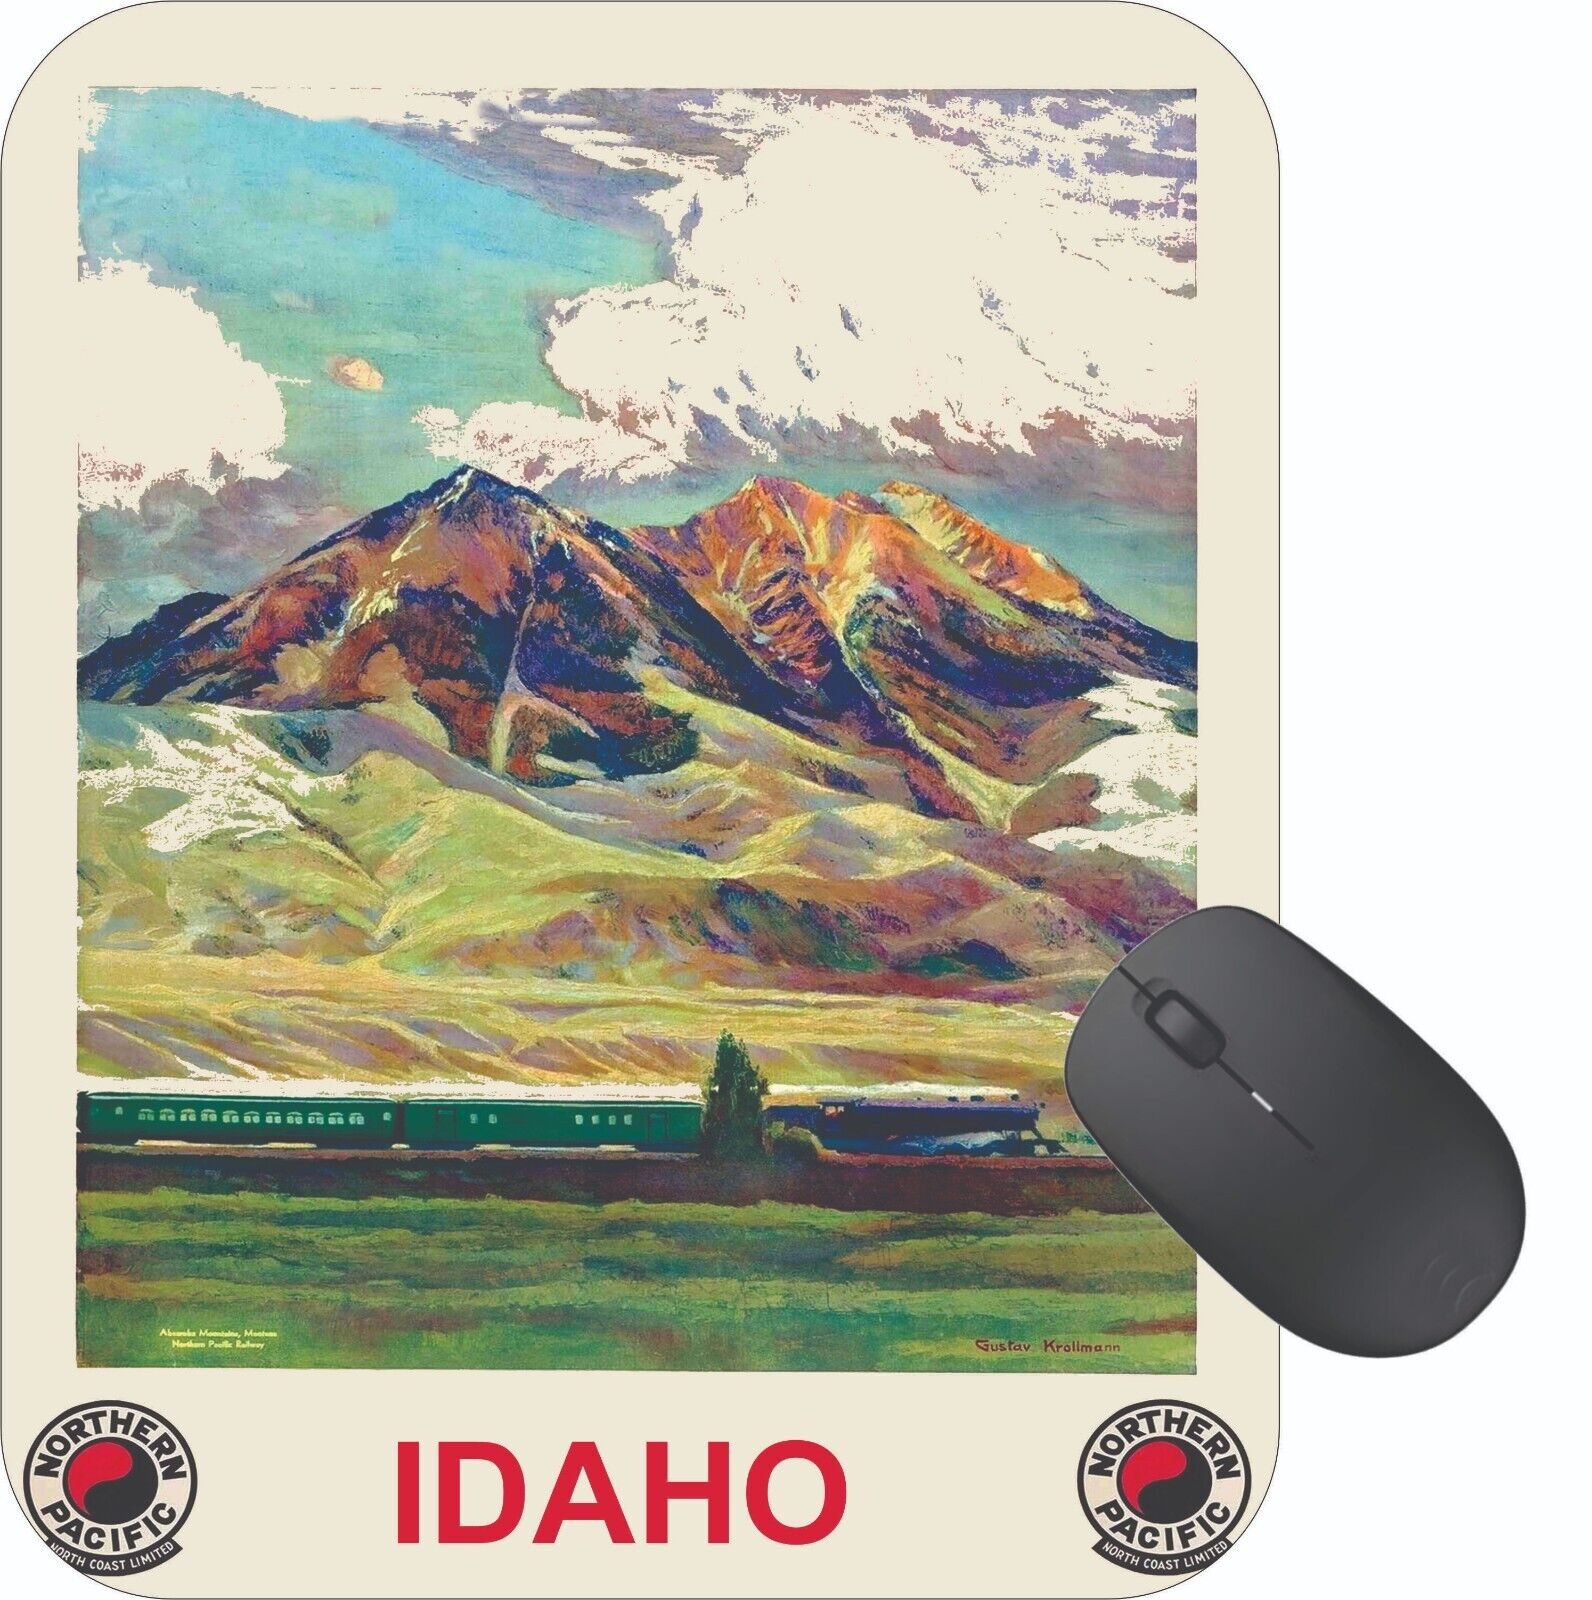 Idaho RR Mouse Pad Stunning Photos Travel Poster Art Vintage Retro